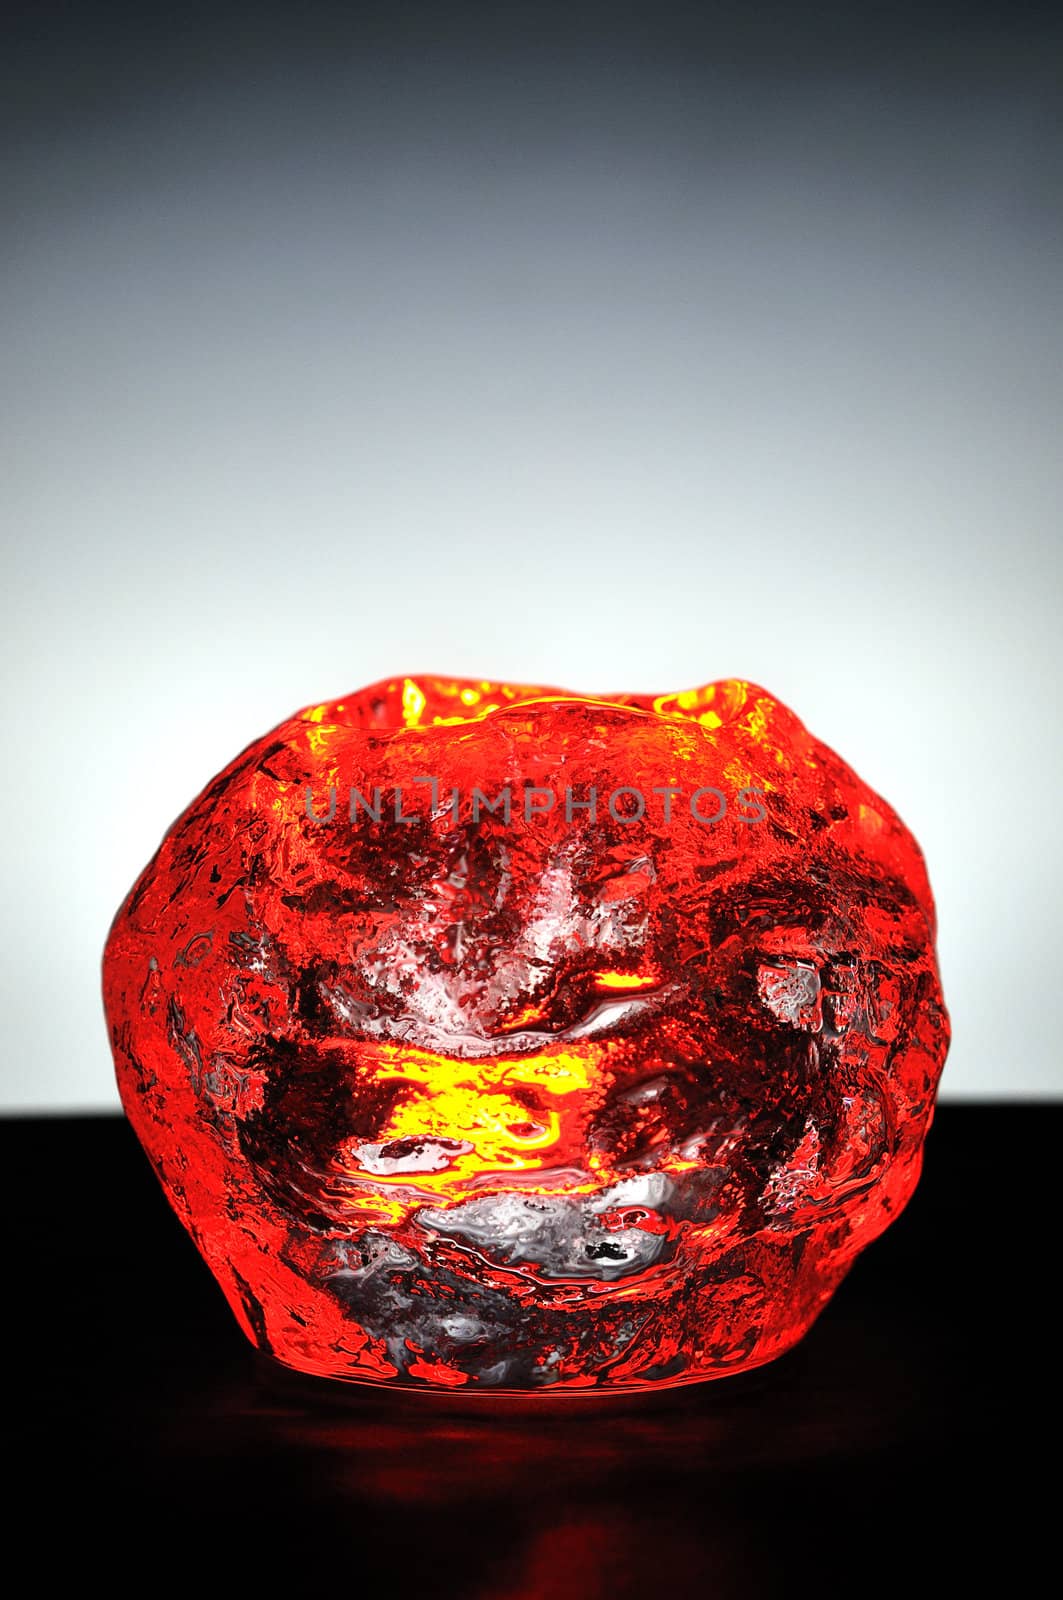 Glowing backlit crystalball 